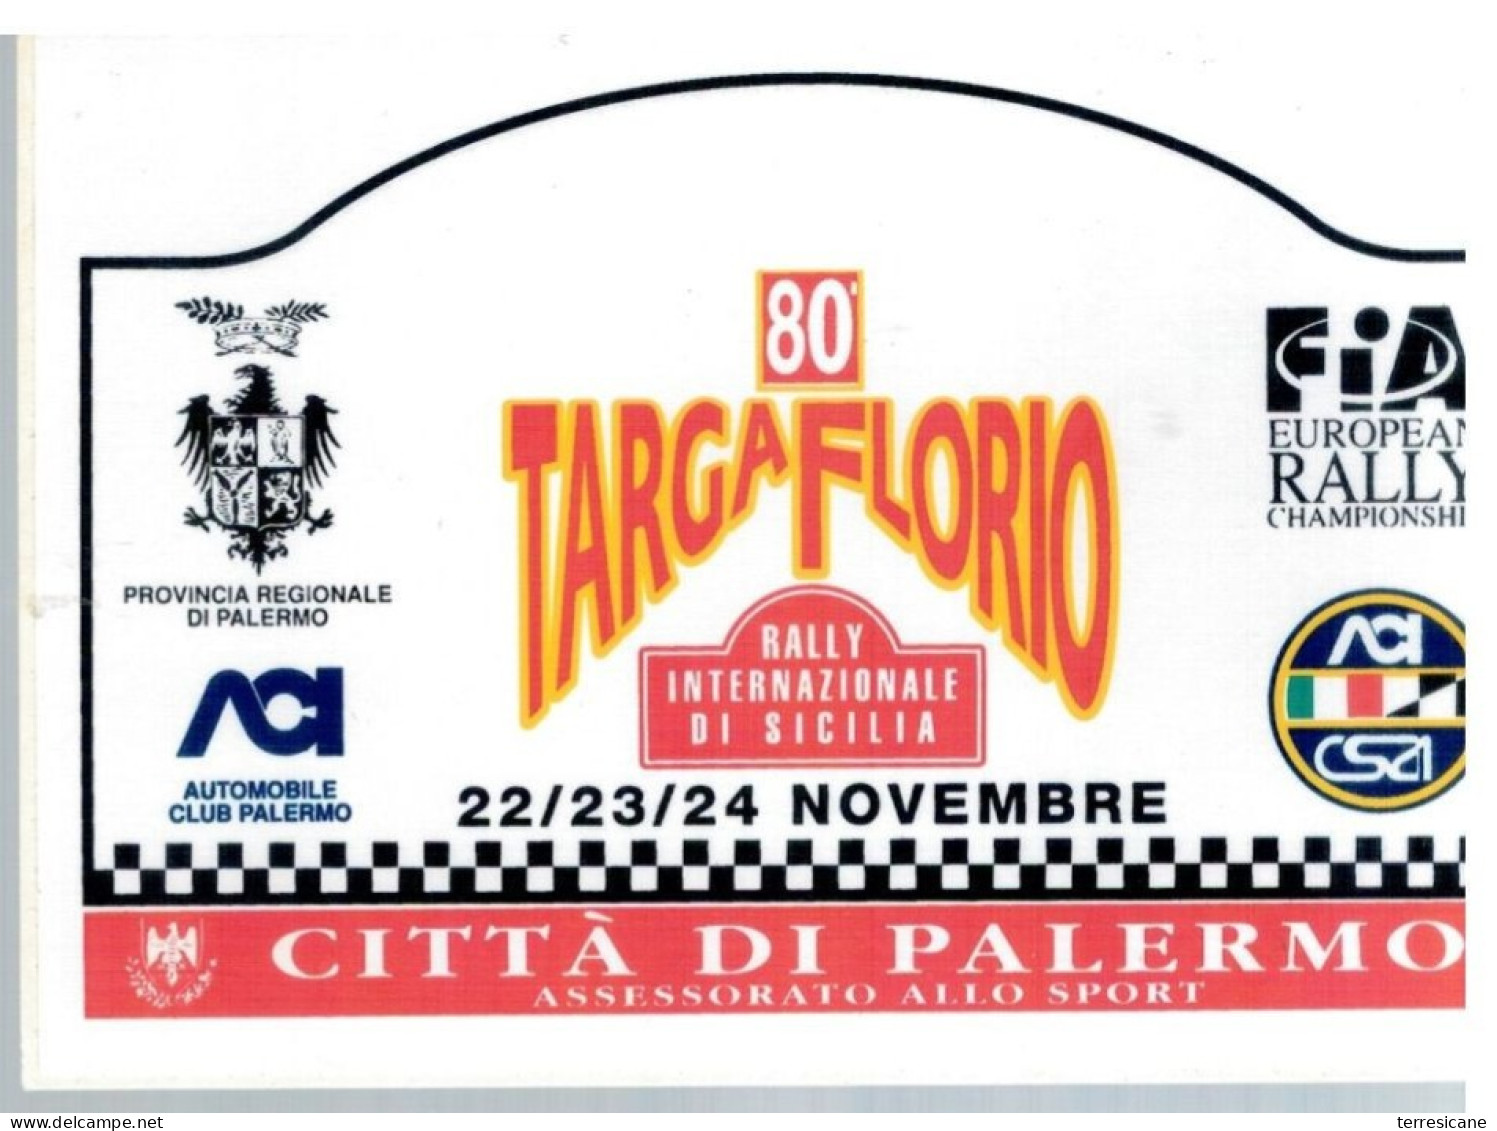 80 TARGA FLORIO 95 RALLY INTERNAZIONALE Placca Adesiva - Car Racing - F1